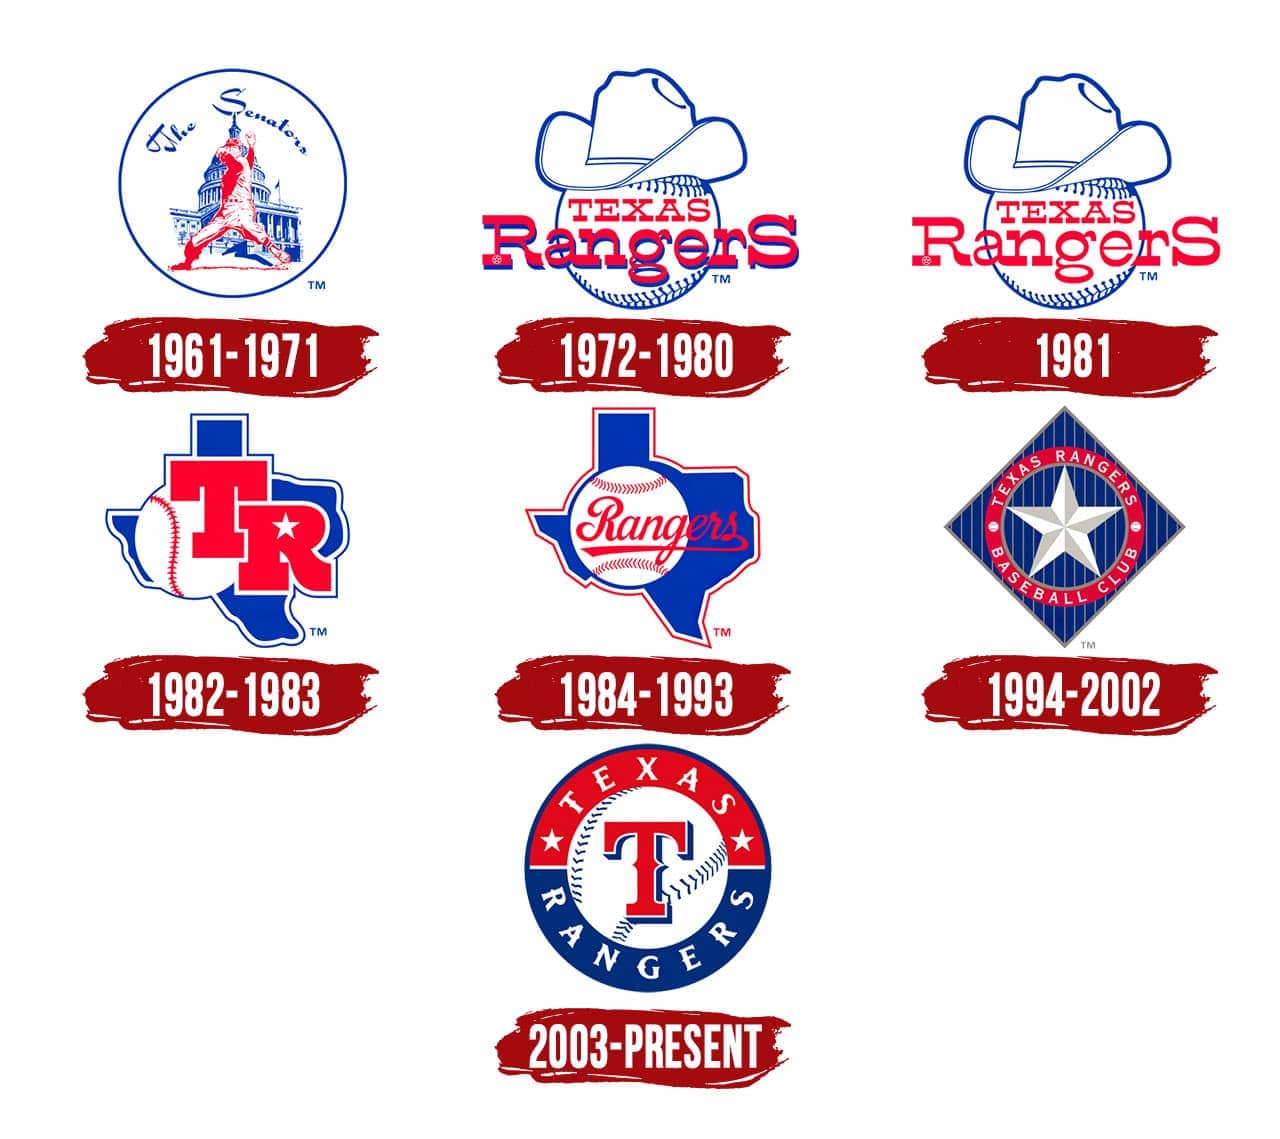 texas rangers new logo